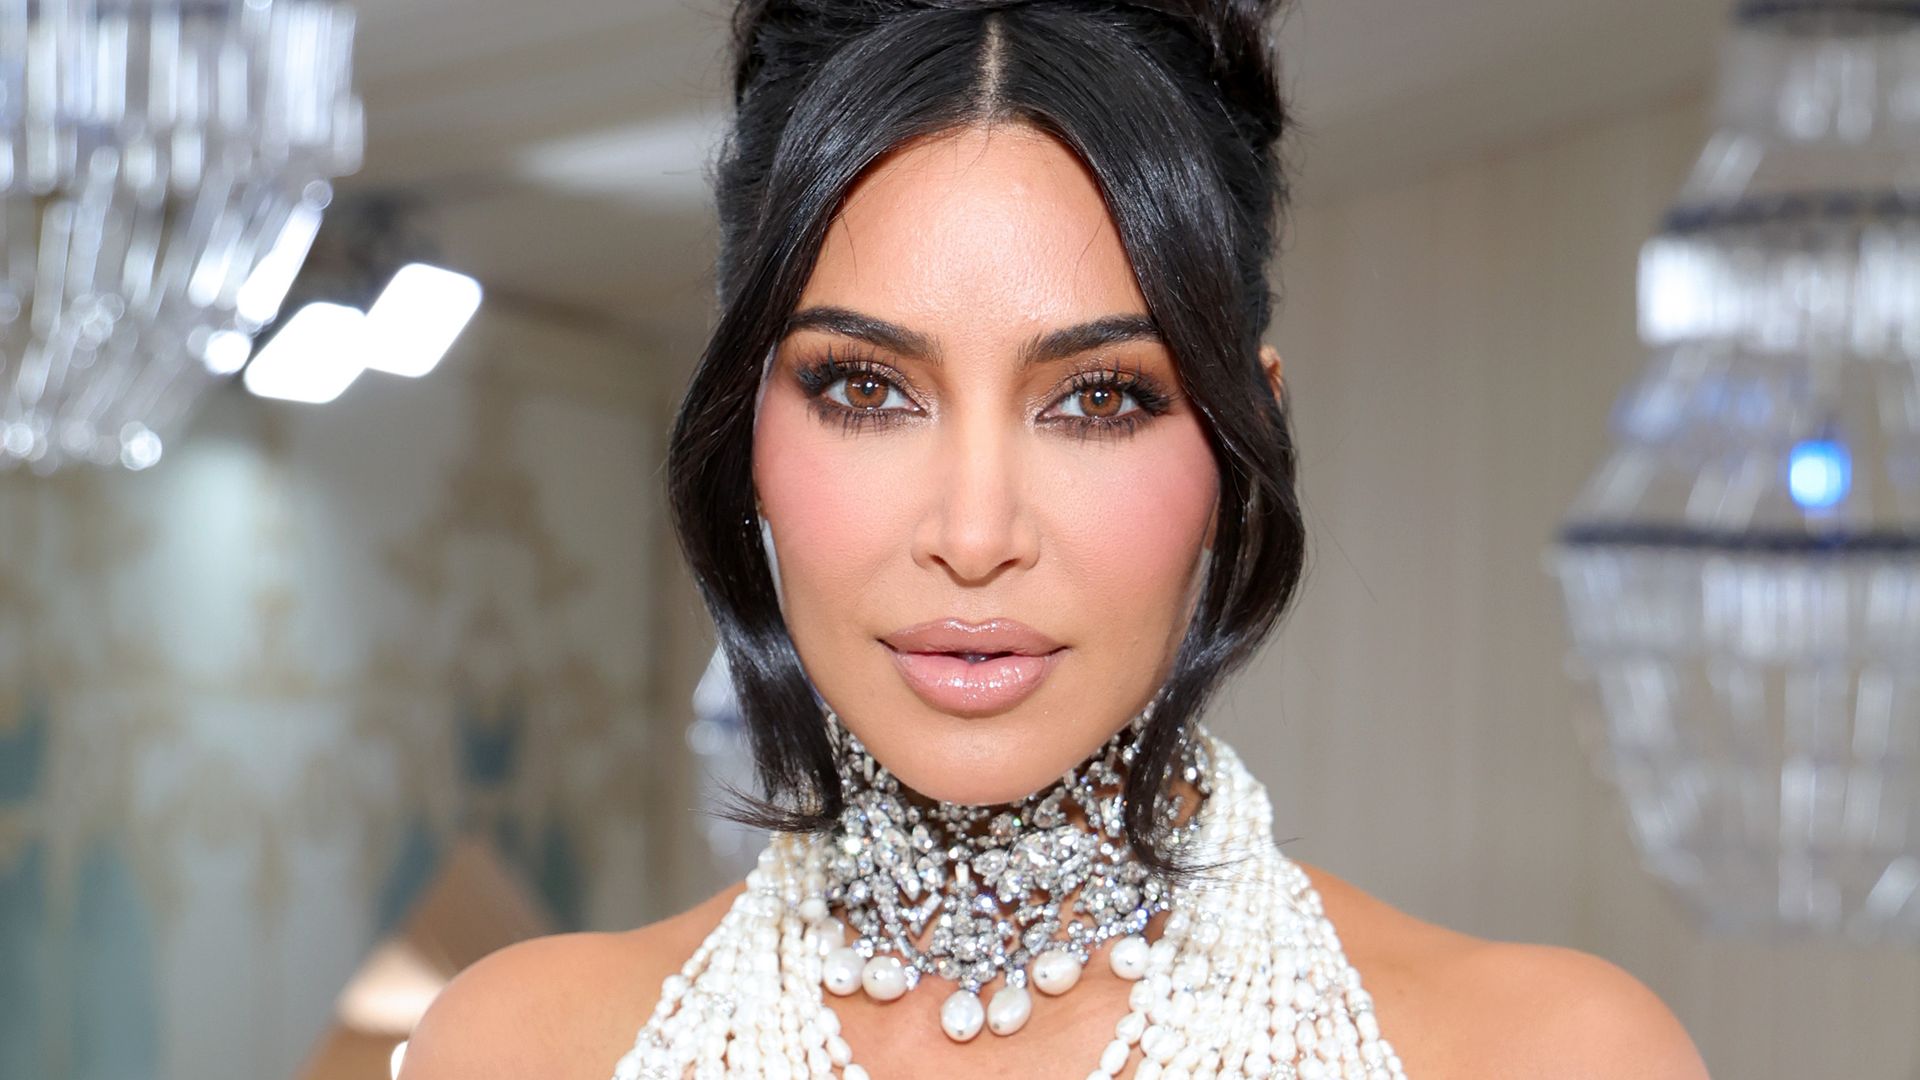 Who is Kim Kardashian dating?